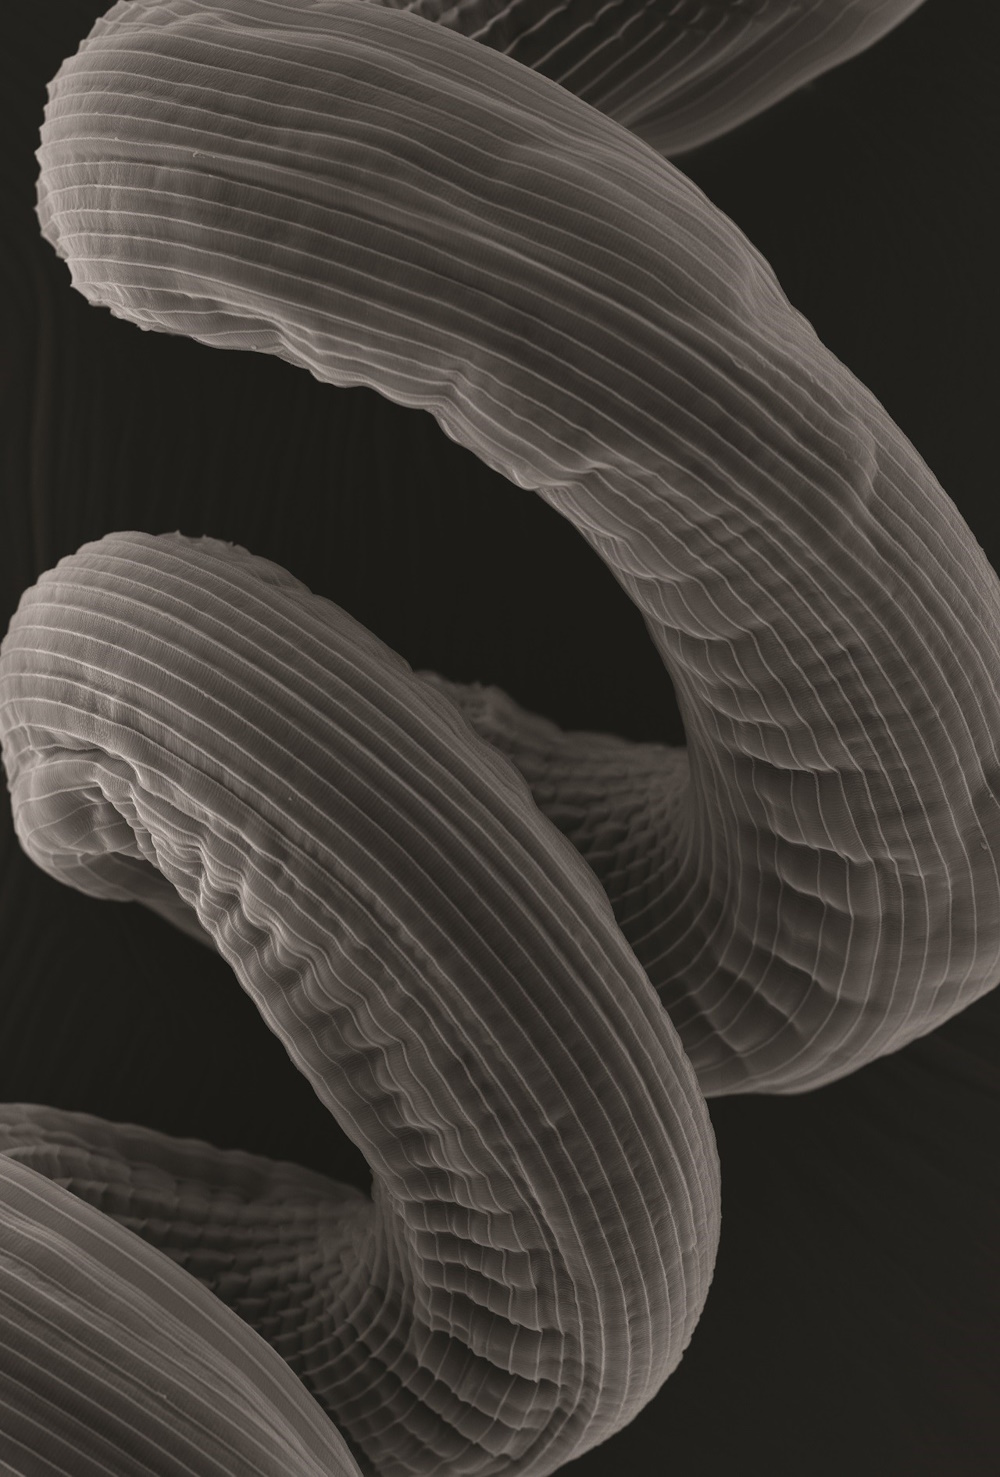 A micro-image of a parasite.